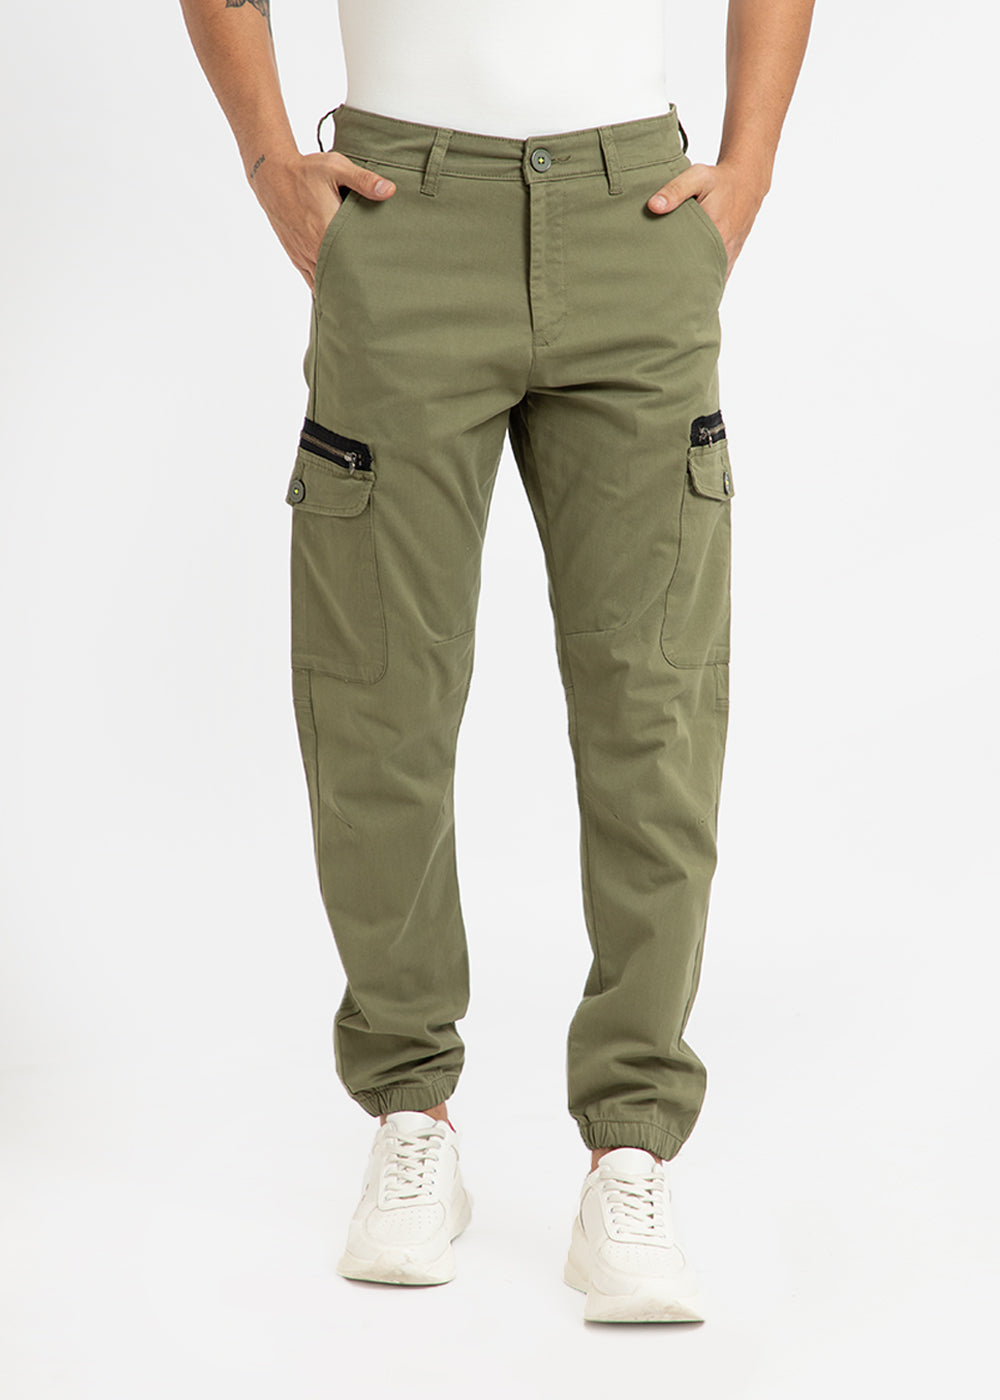 Moss Green Elasticated Cargo Pants